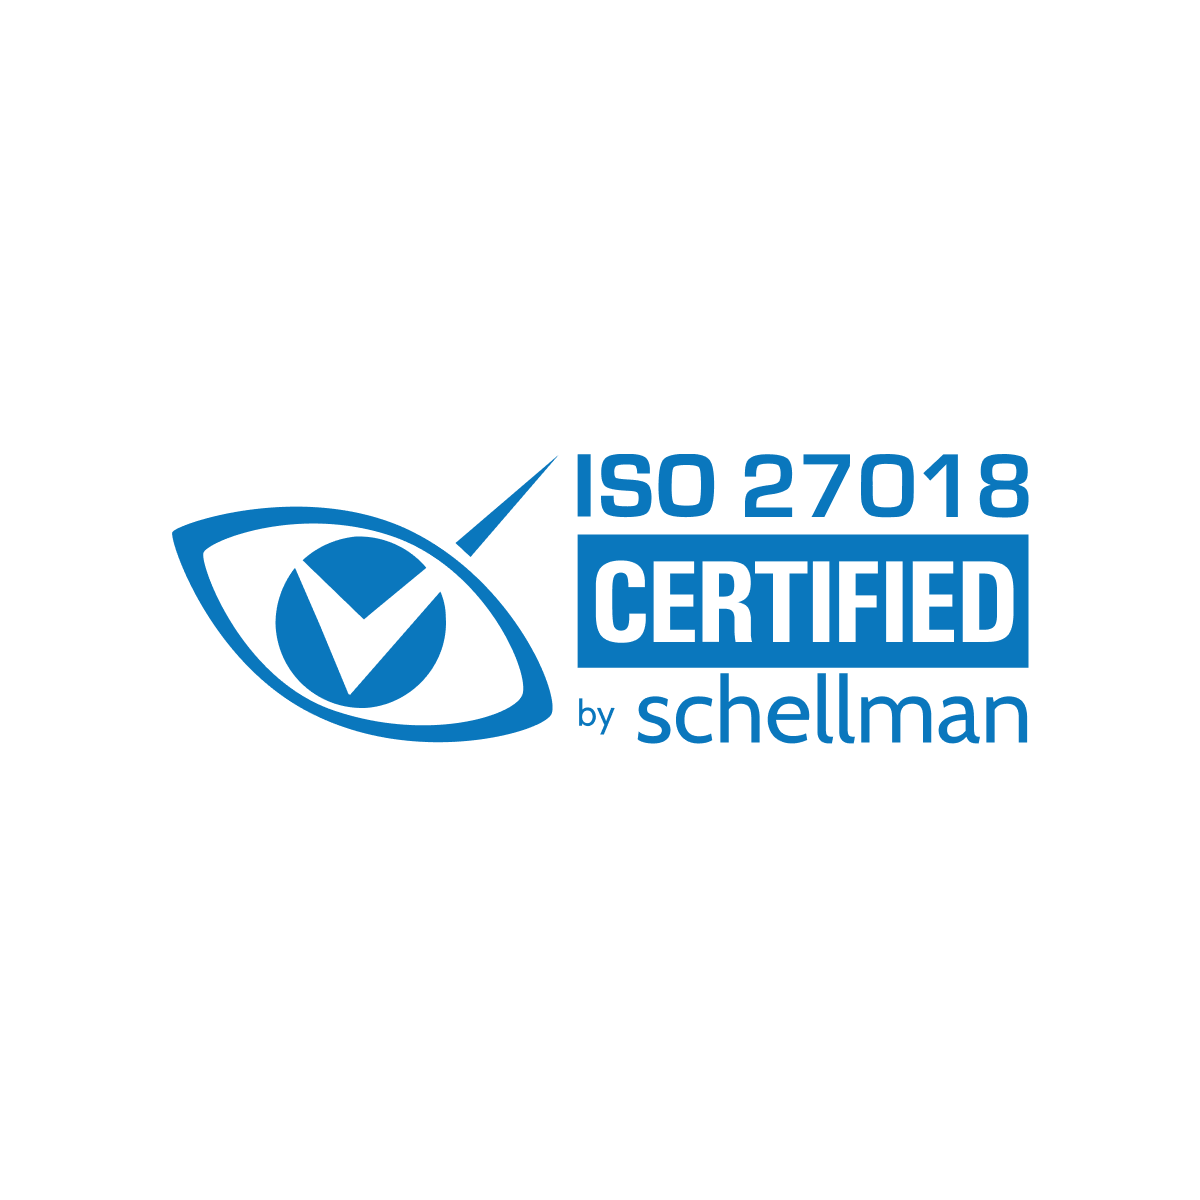 ISO 27018 Certified badge